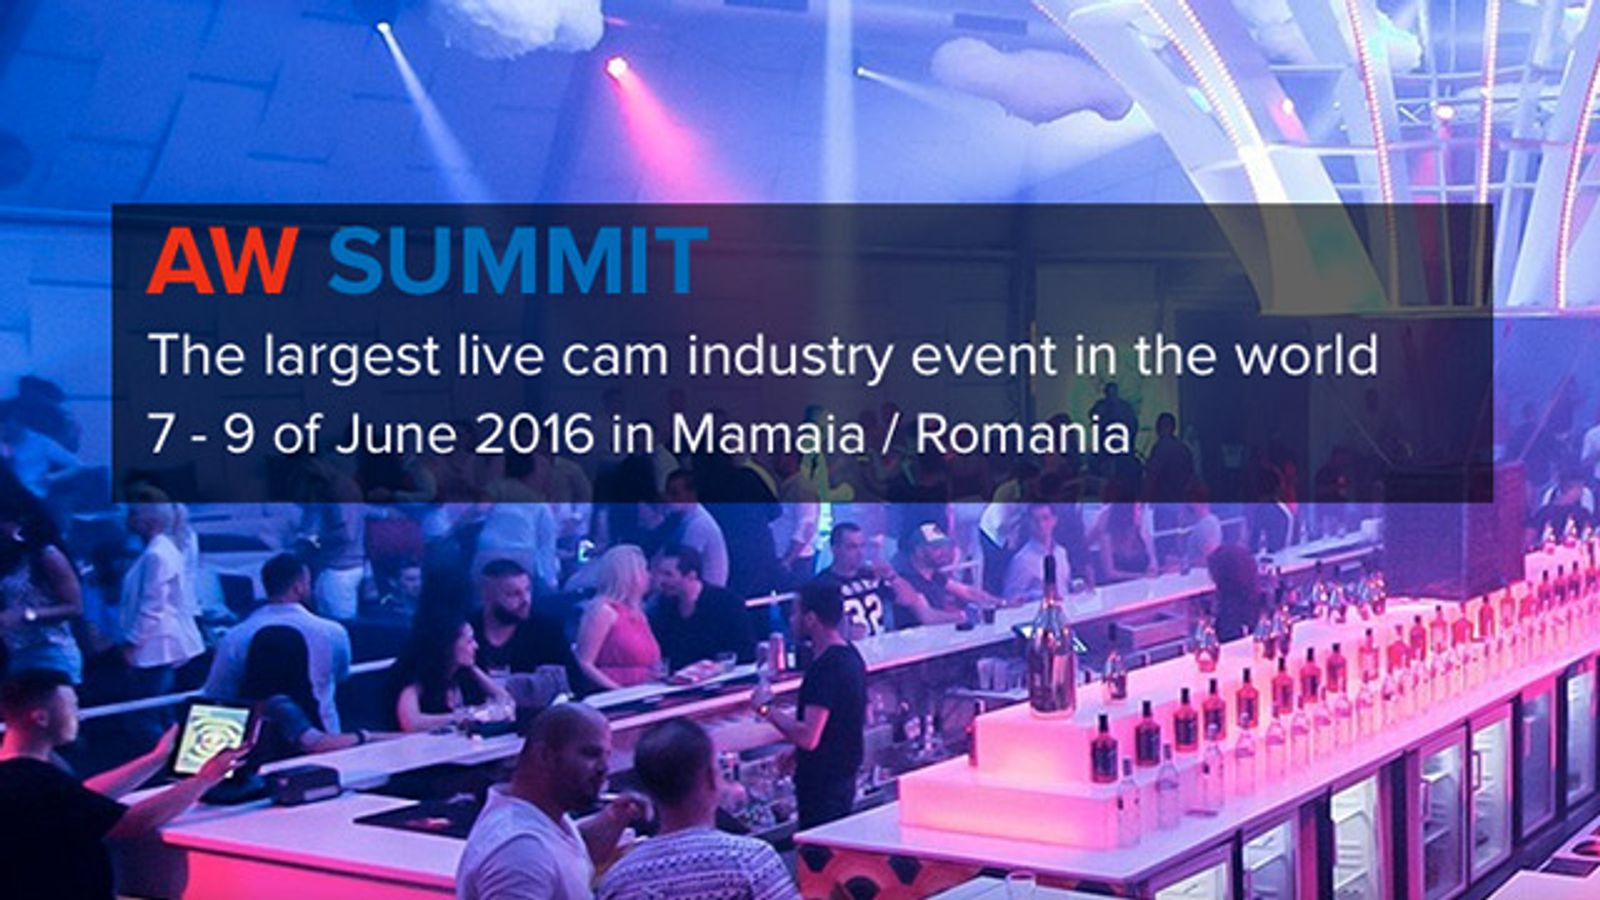 AWSummit, AW Awards Return to Mamaia, Romania in June